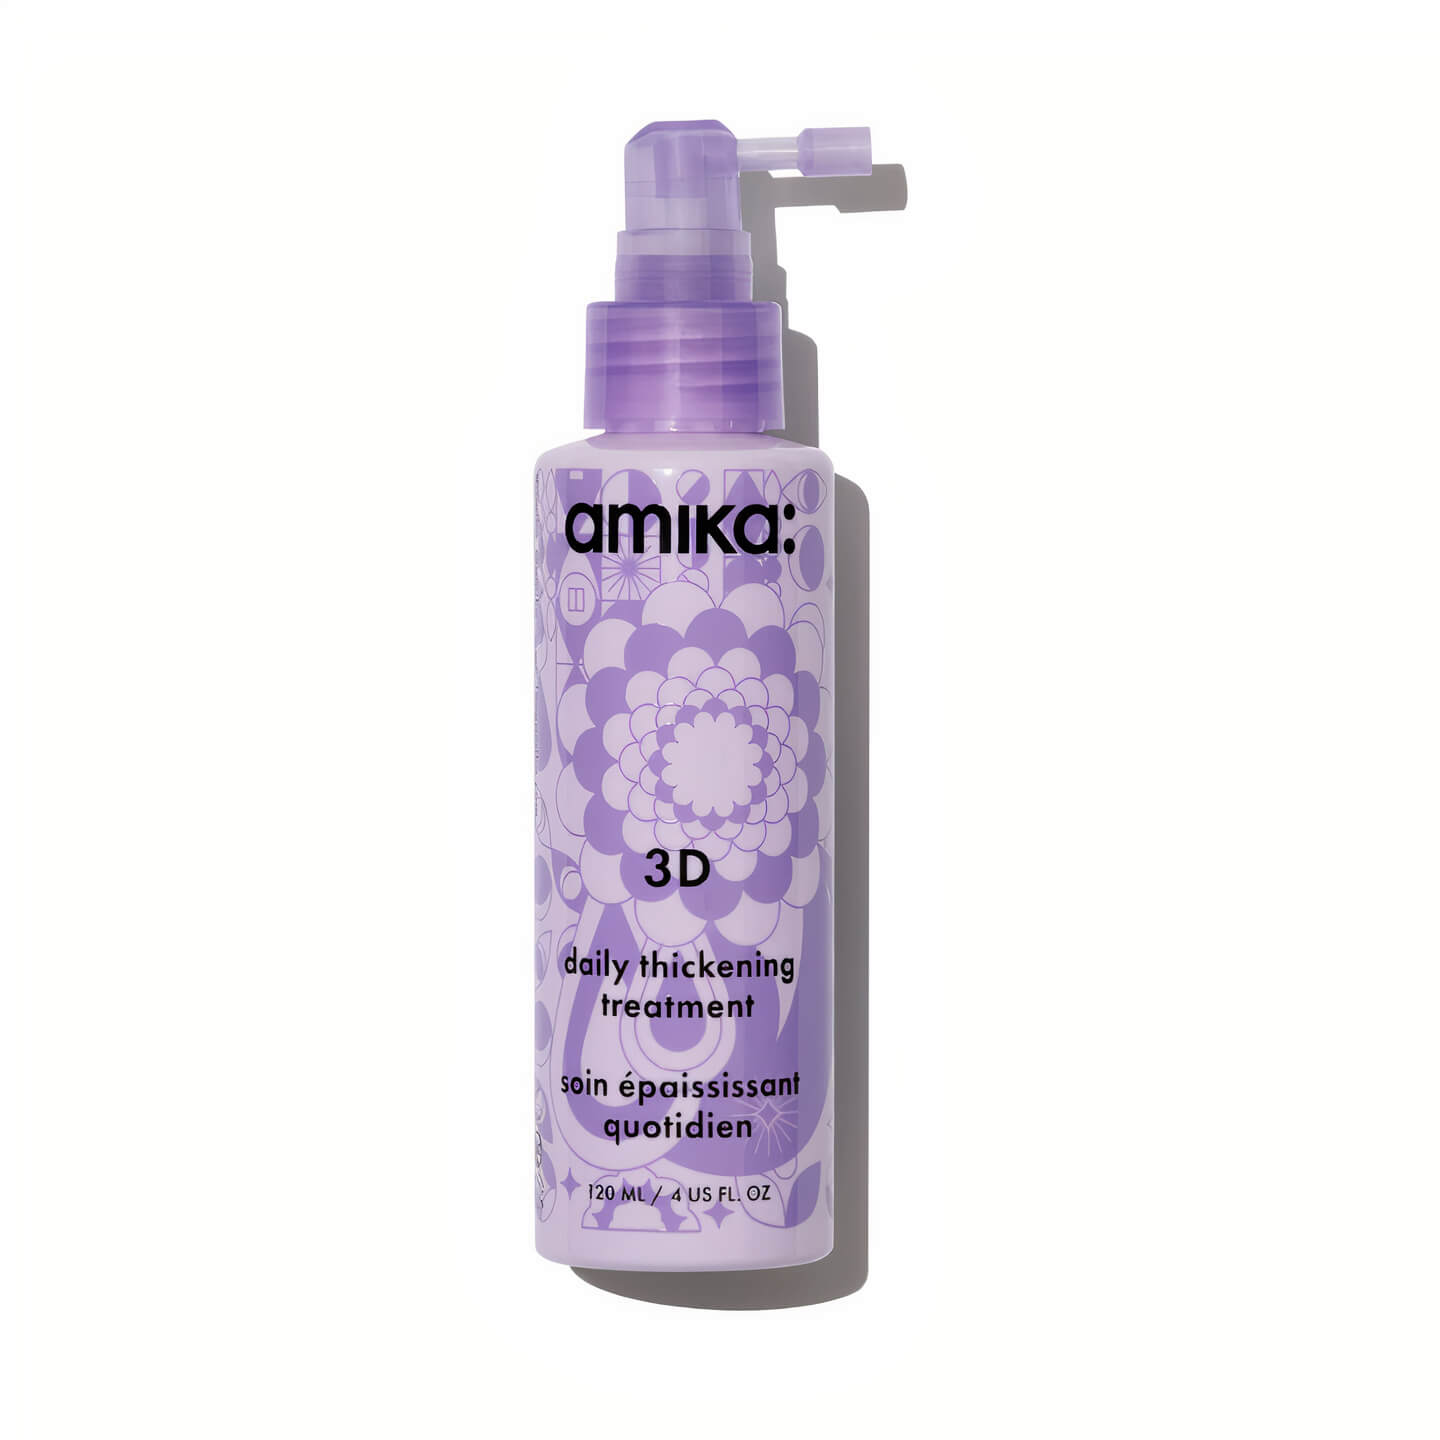 Amika: 3D Daily Thickening Treatment